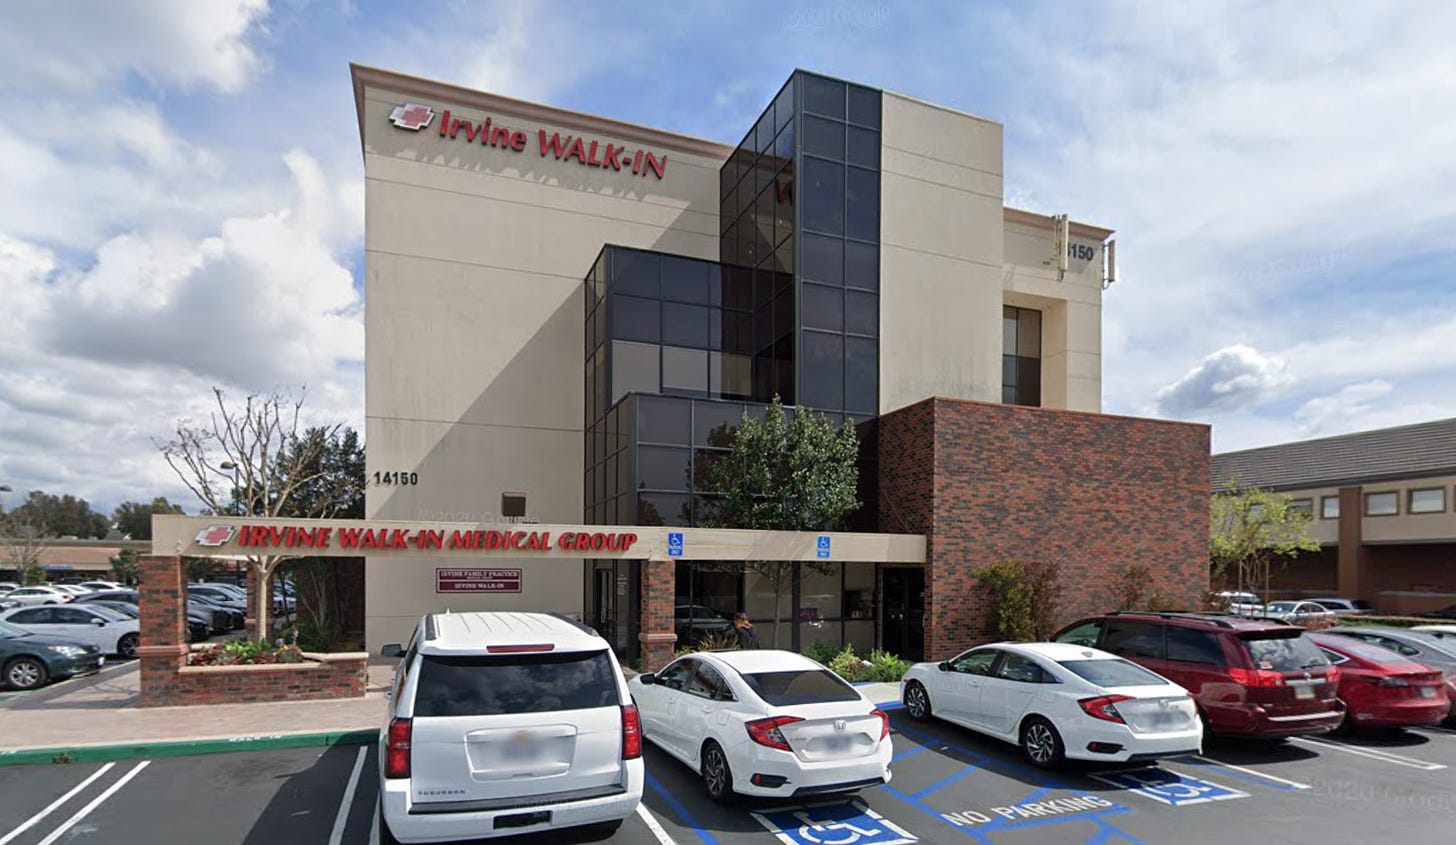 Irvine Walk-In Center, a medical clinic in Irvine, California in Southern California.